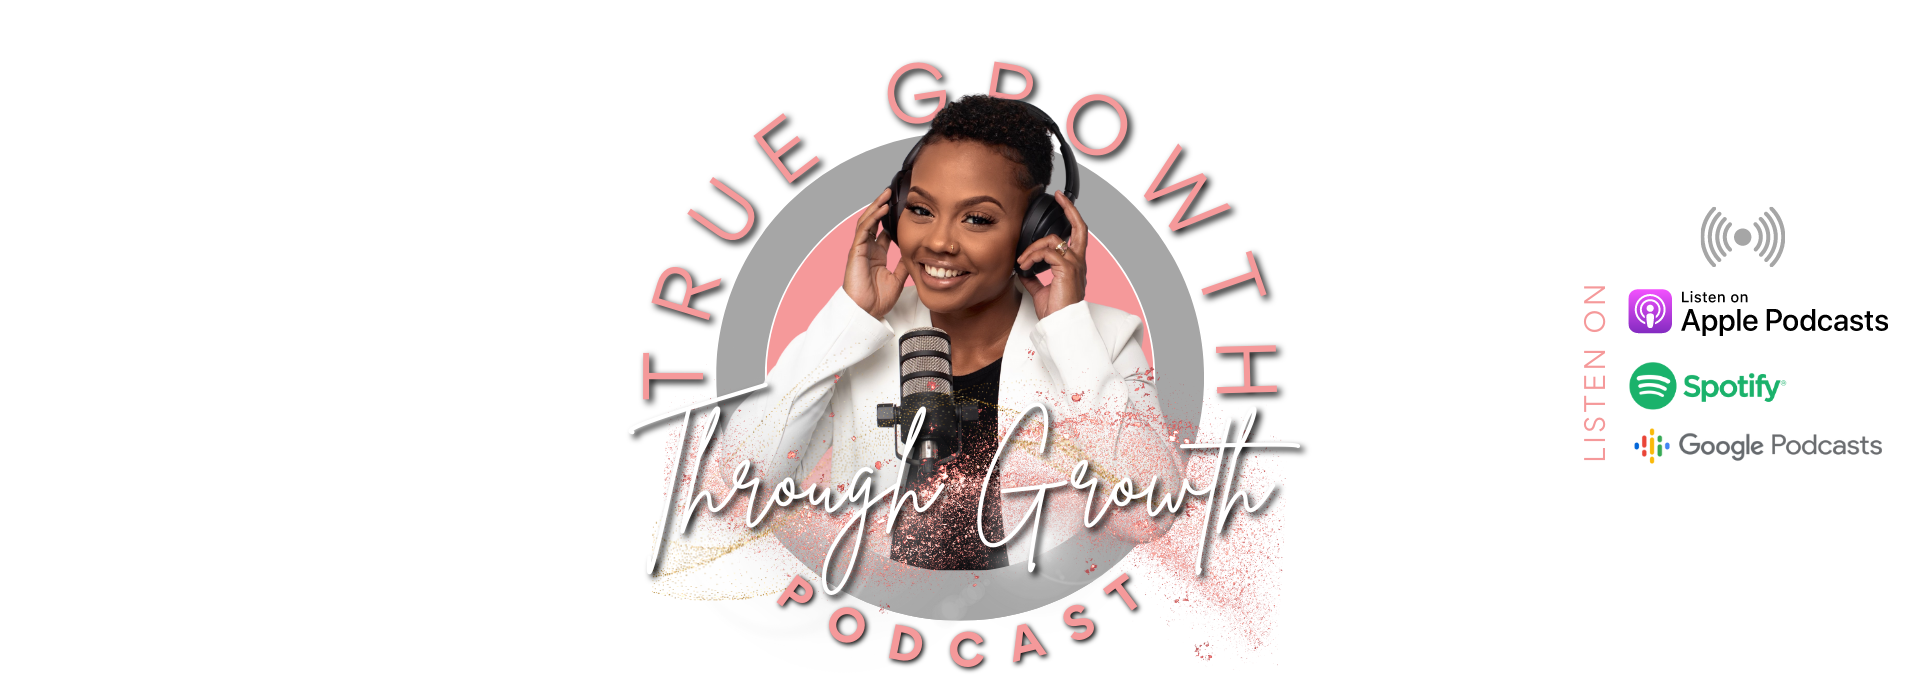 True Growth Through Growth Podcast